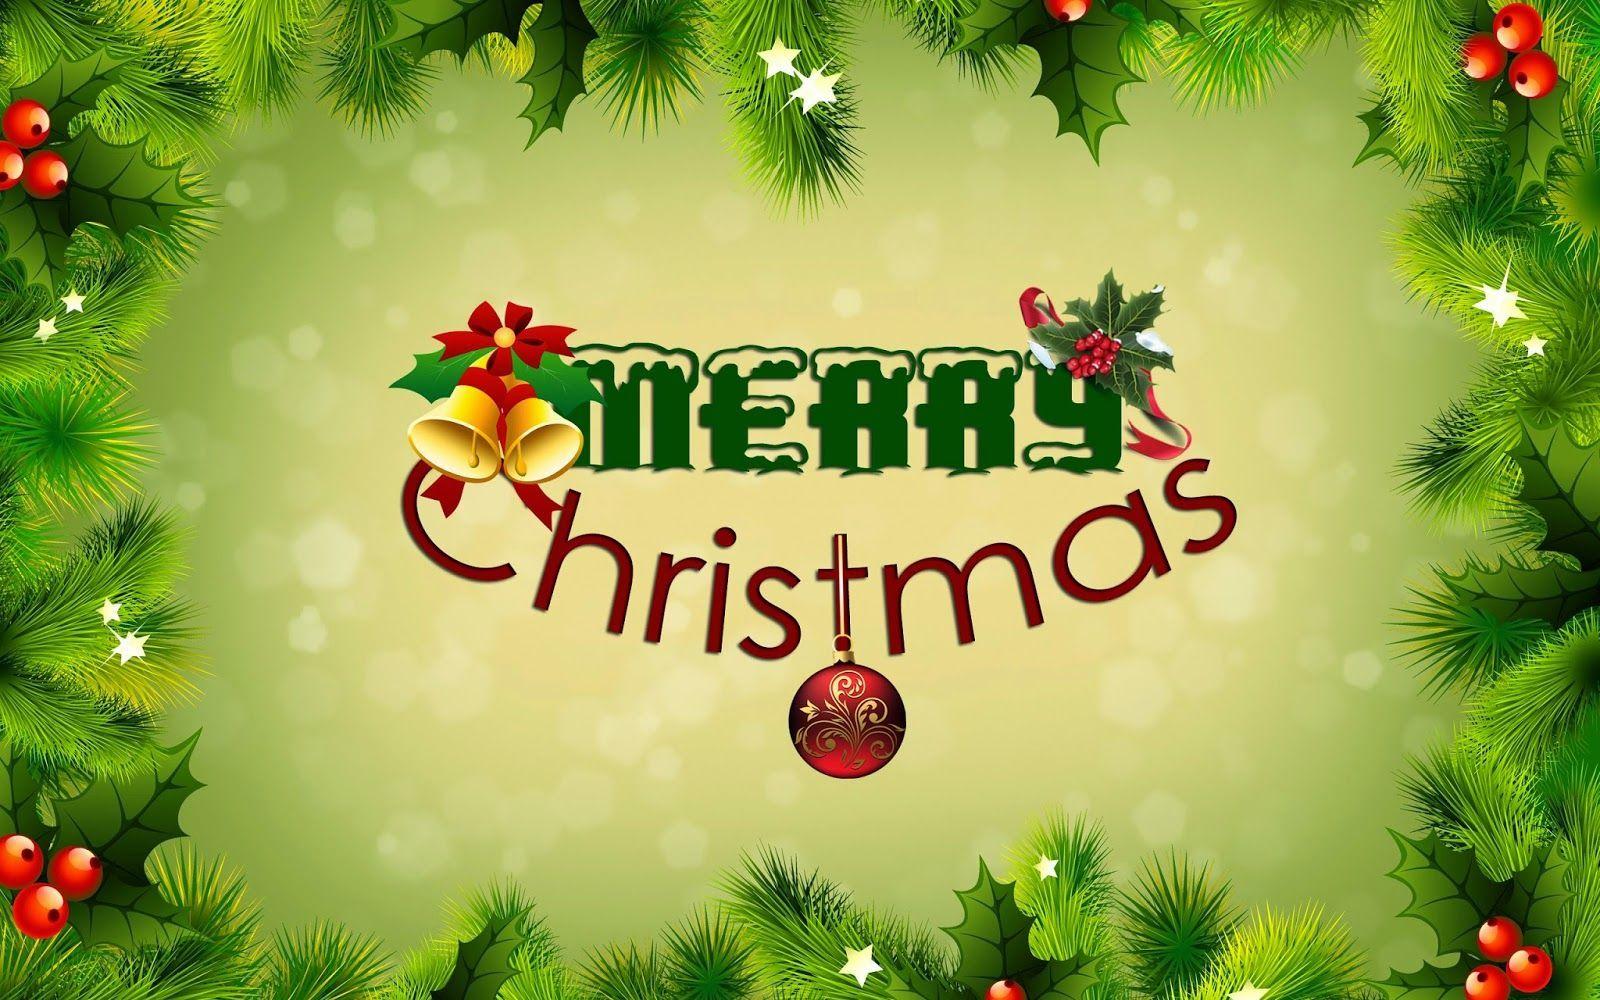 Happy Merry Christmas Image, 1080p HD wallpaper. Get the latest beautiful Christmas Ph. Merry christmas picture, Merry christmas wallpaper, Merry christmas gif